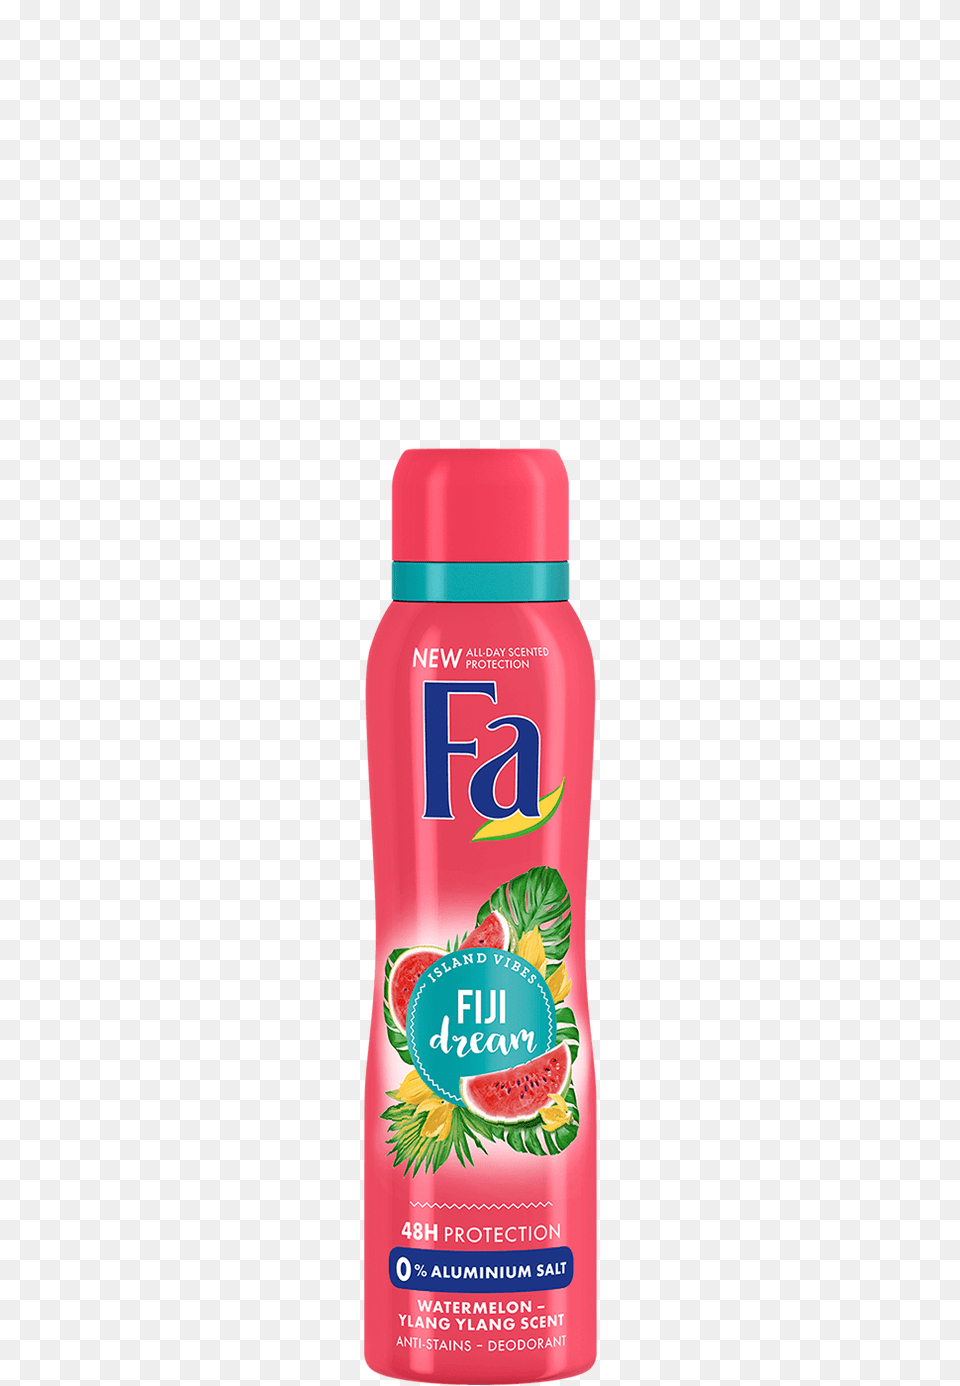 Island Vibes Fiji Dream Deodorant Spray, Cosmetics, Food, Ketchup Free Png